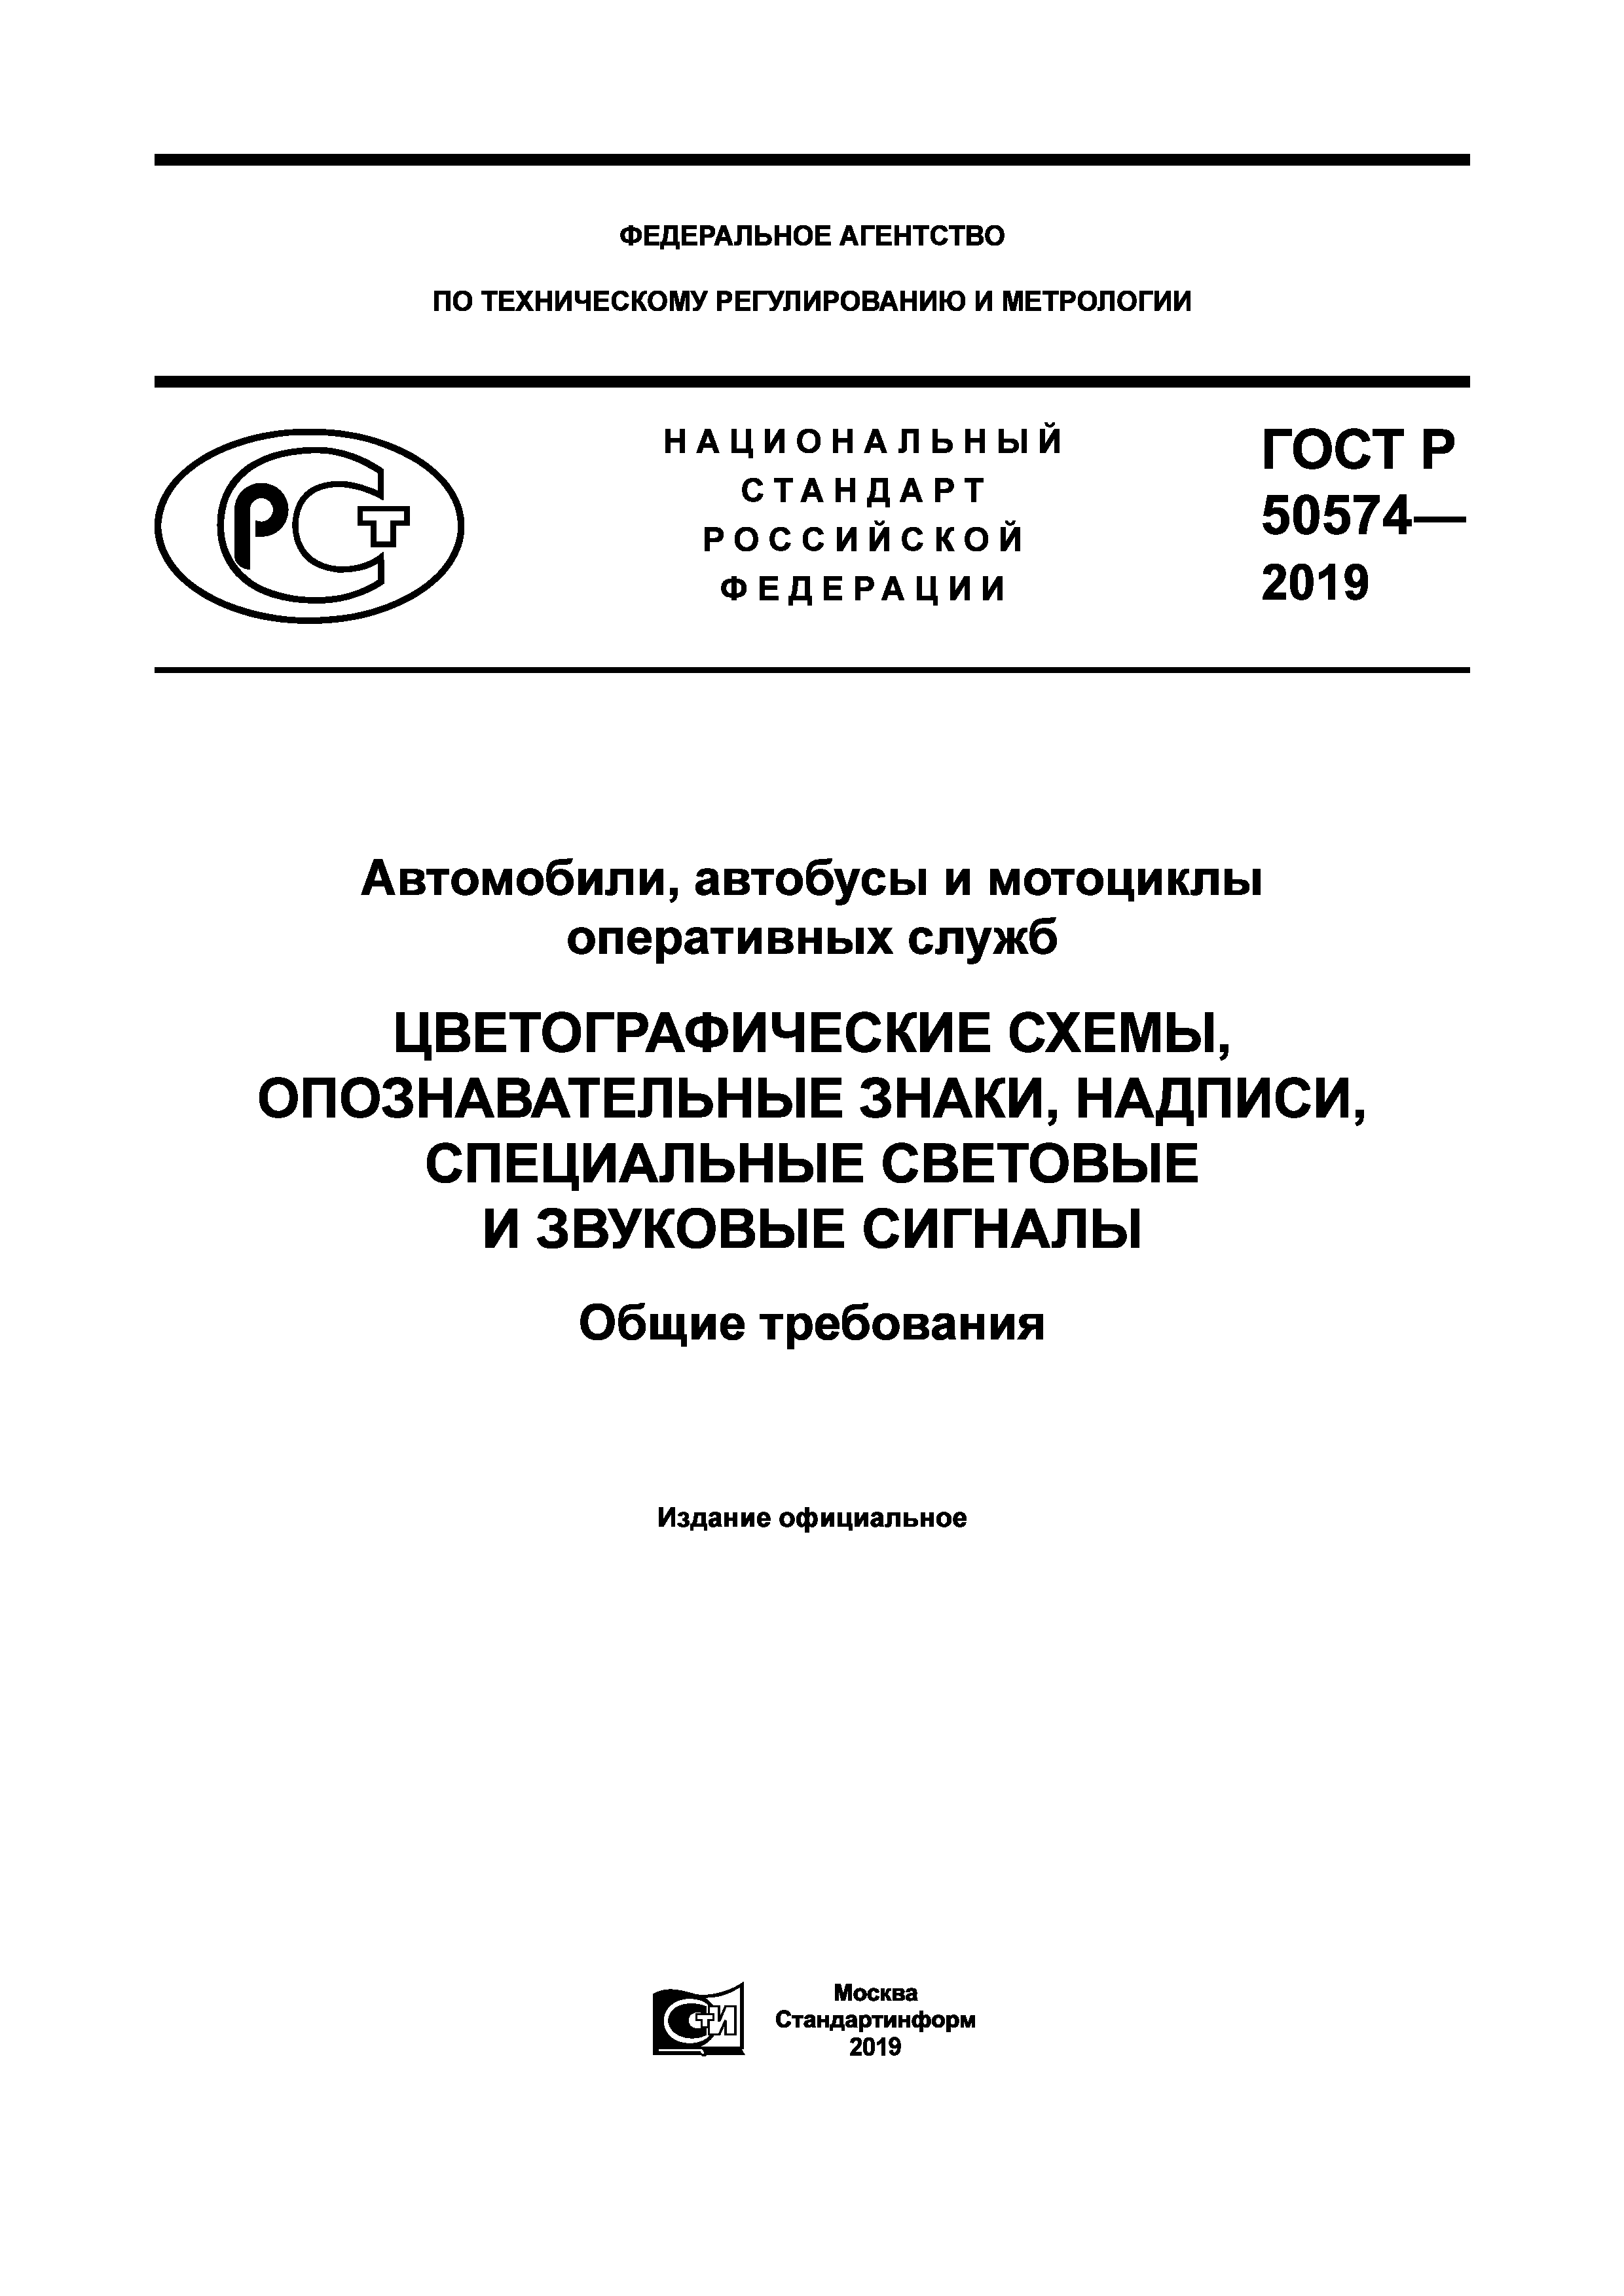 ГОСТ Р 50574-2019